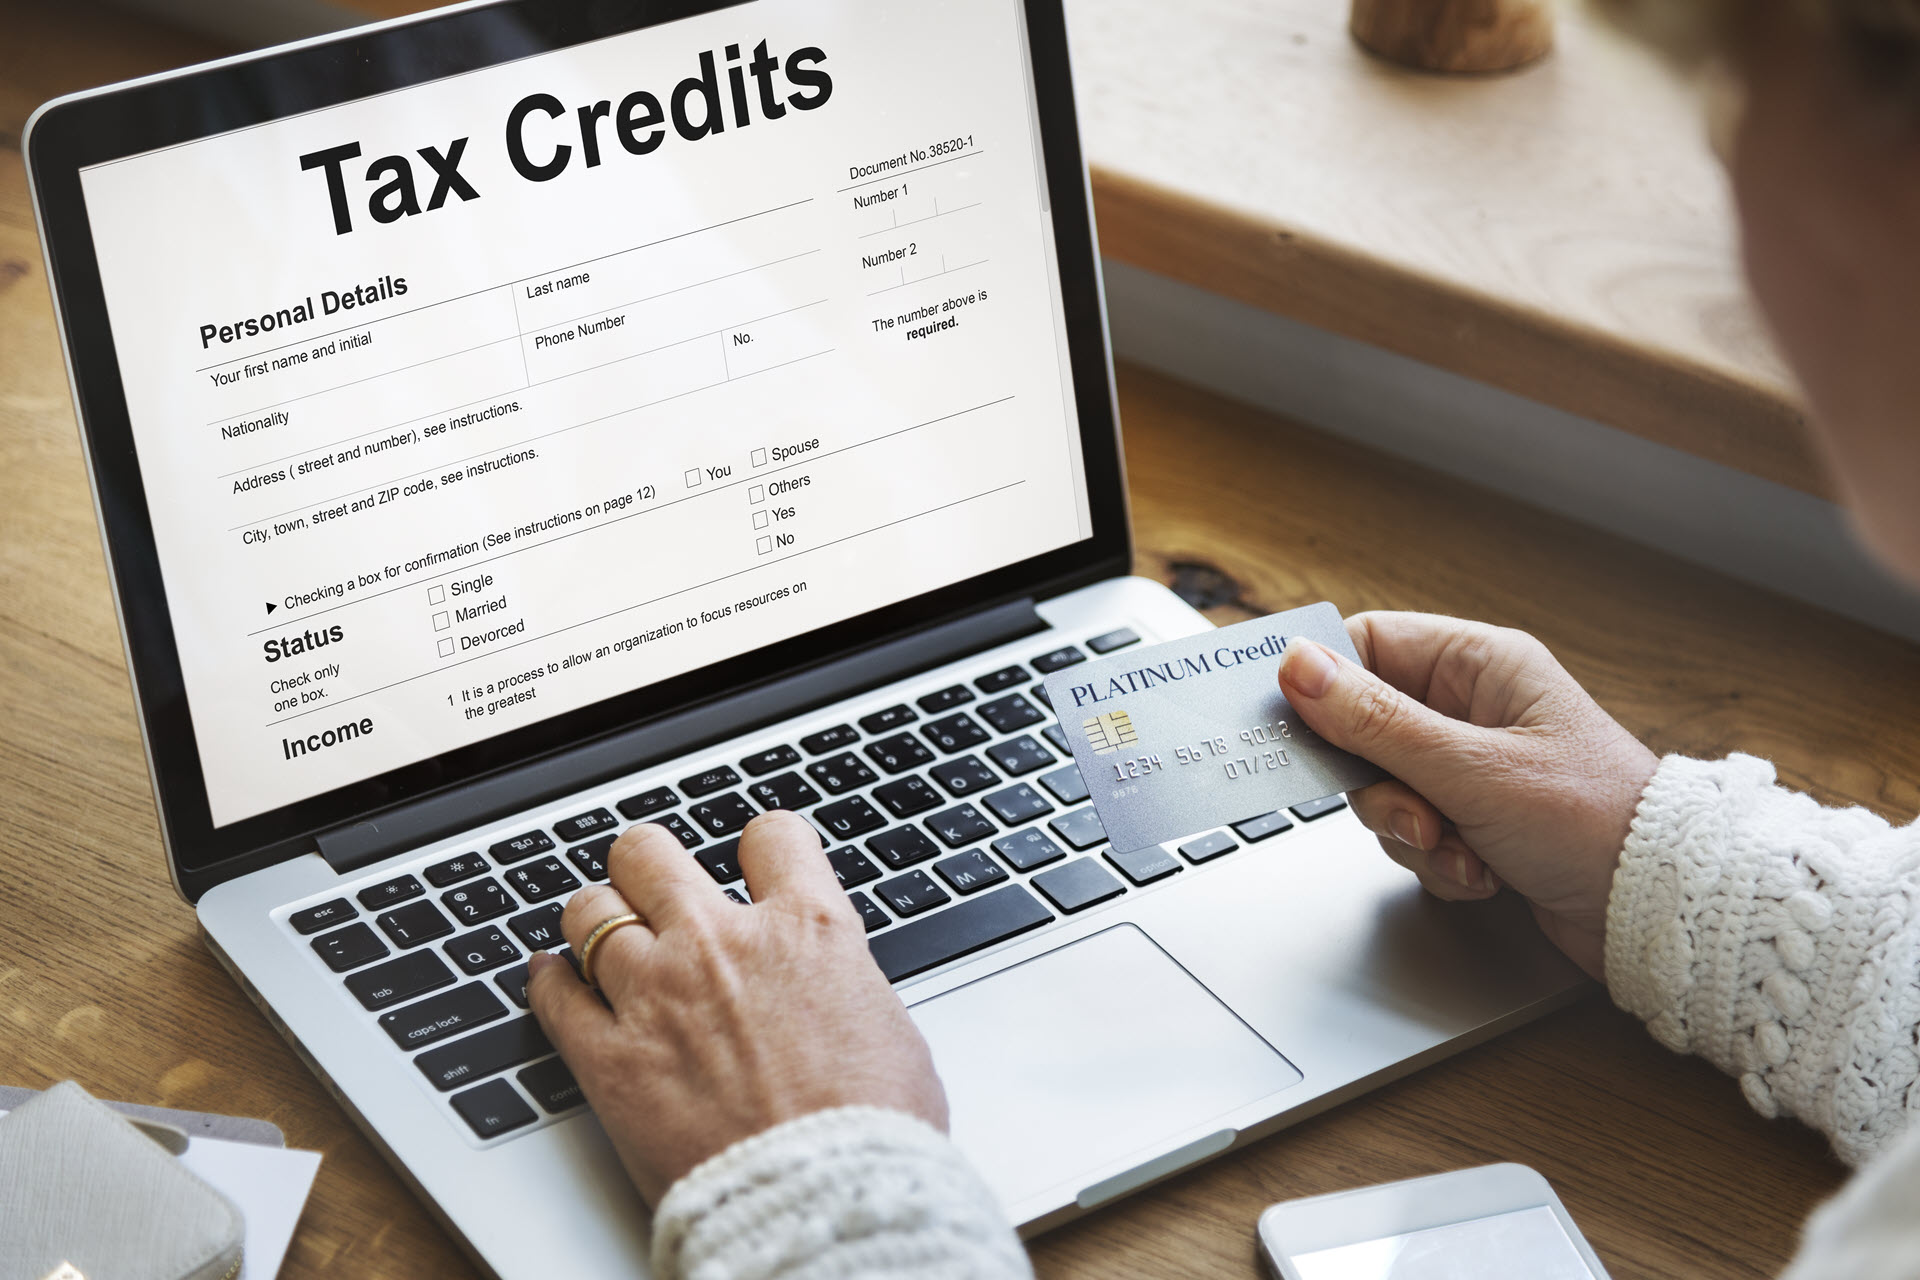 tax-credits-claim-return-deduction-refund-concept-PQ22EP9